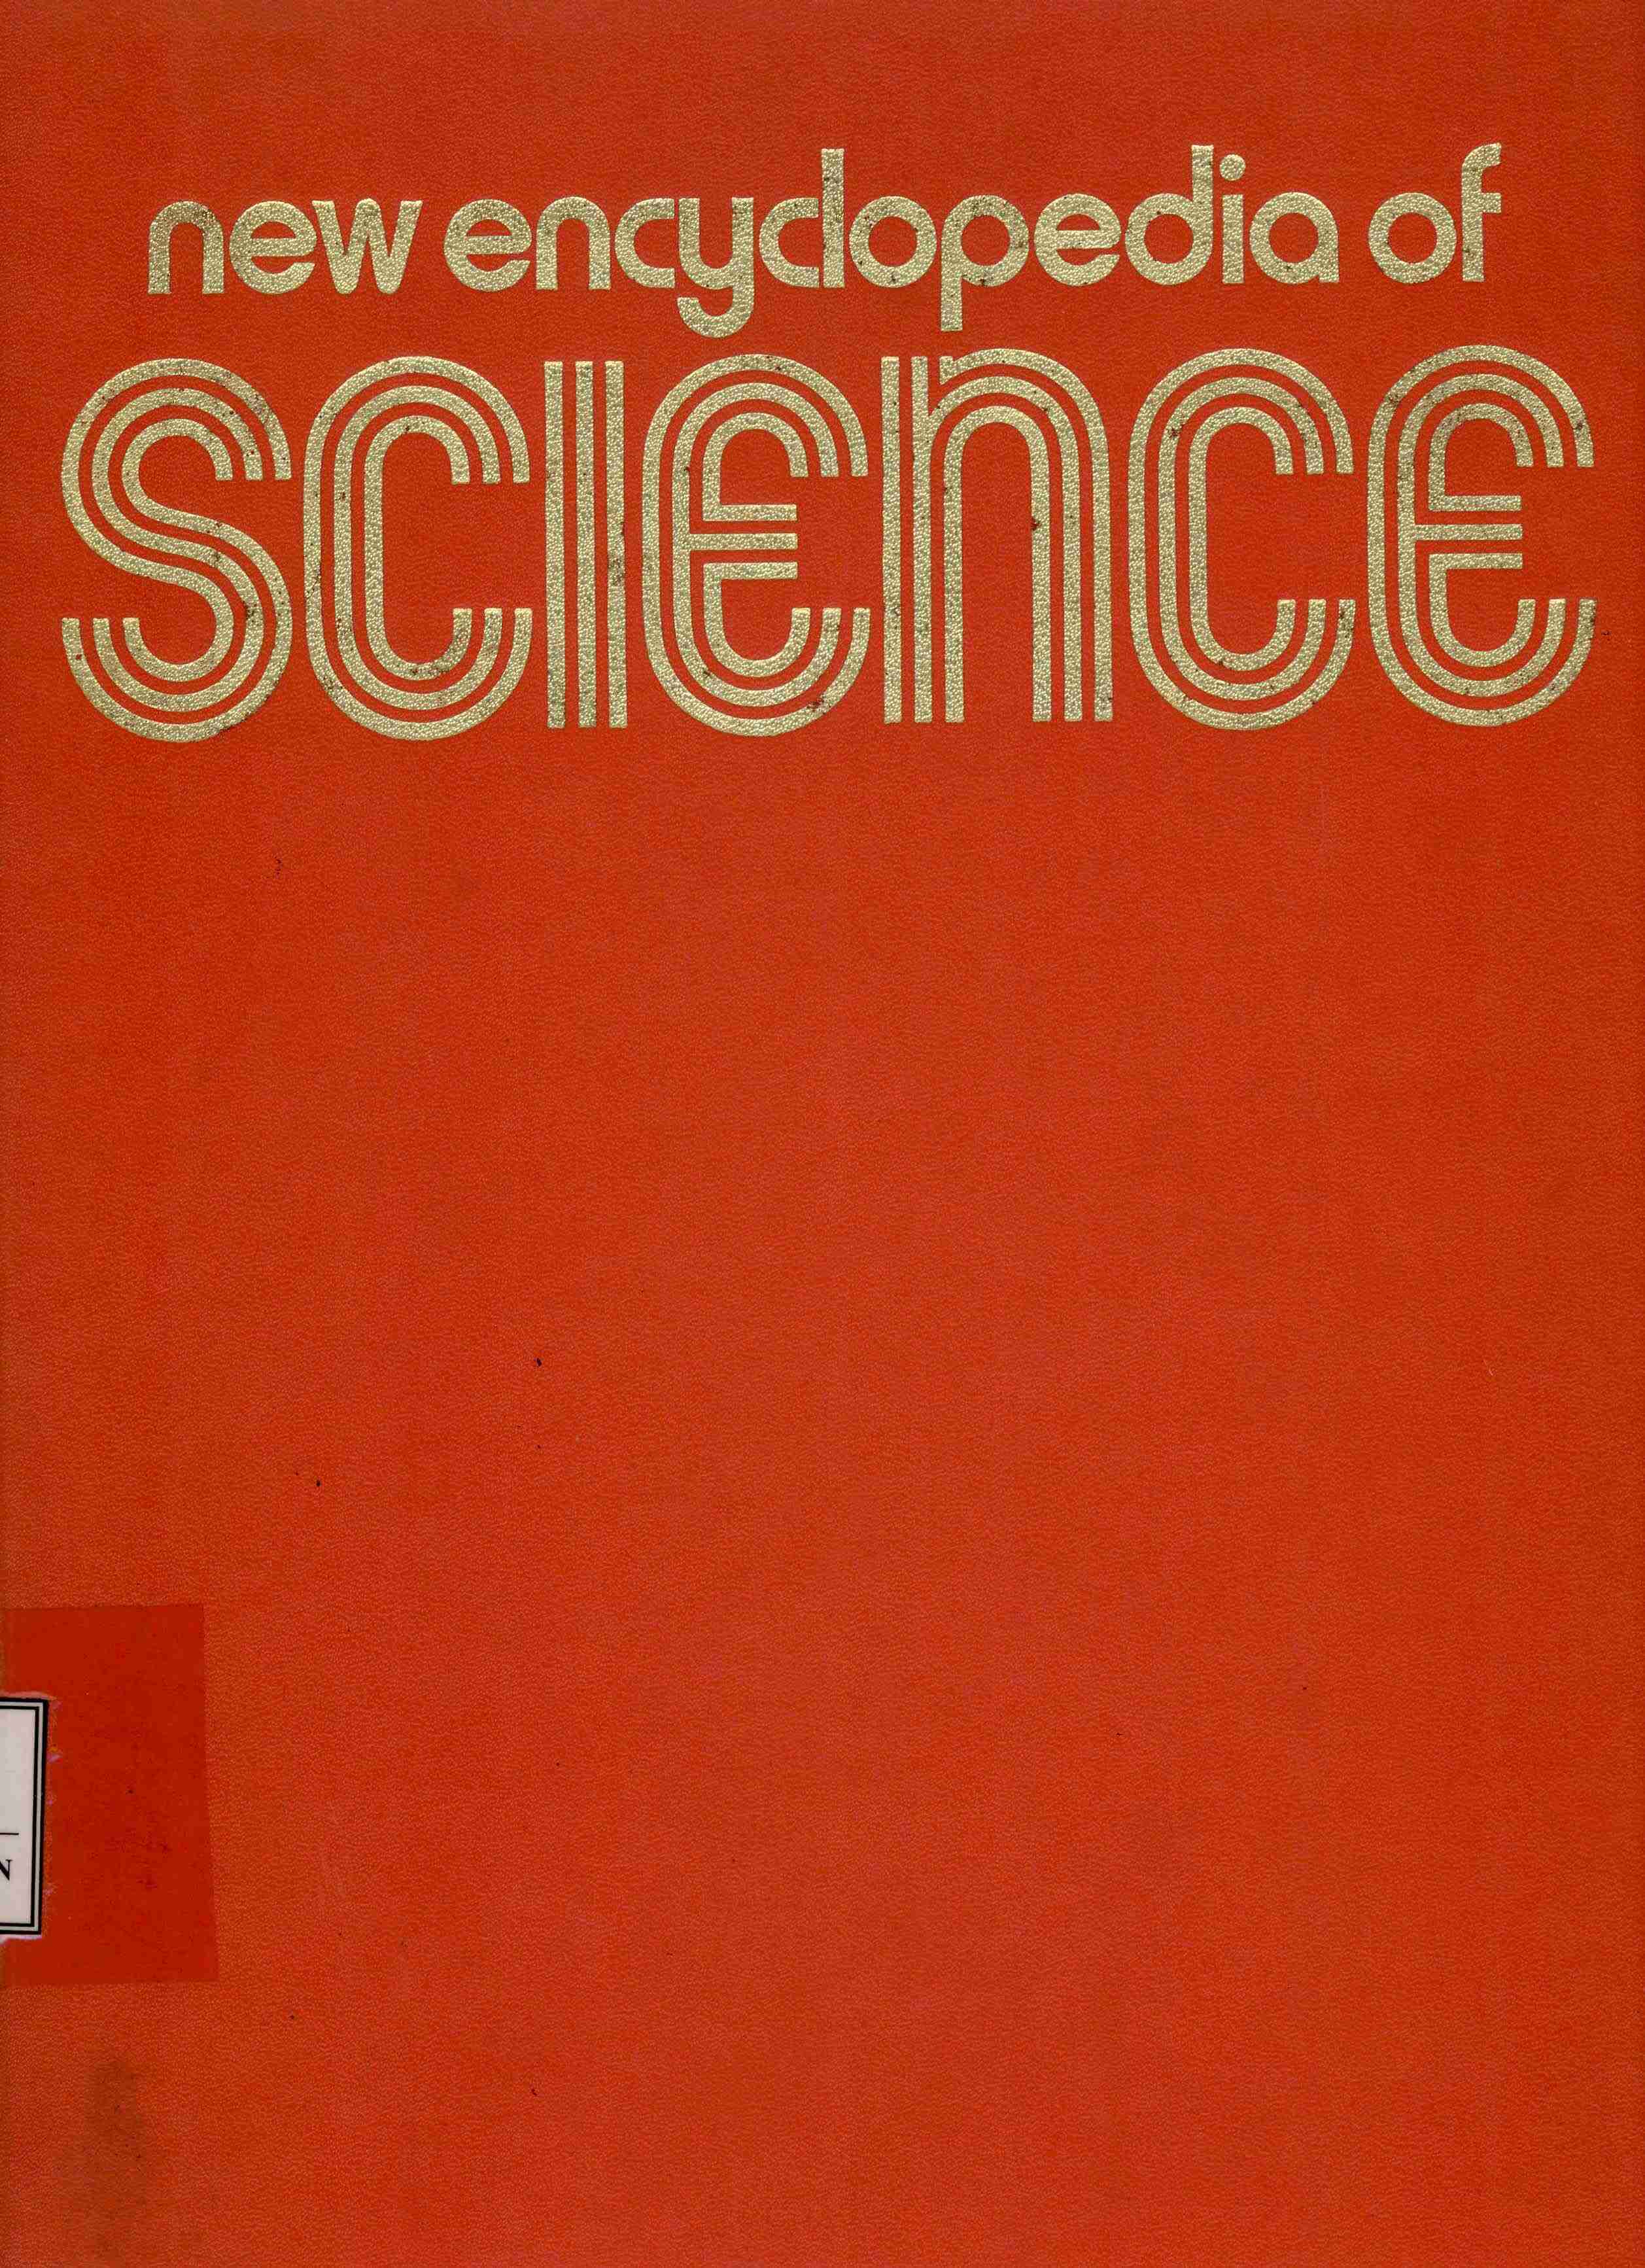 New encyclopedia of sciene :  vol. 5 distillation - first aid